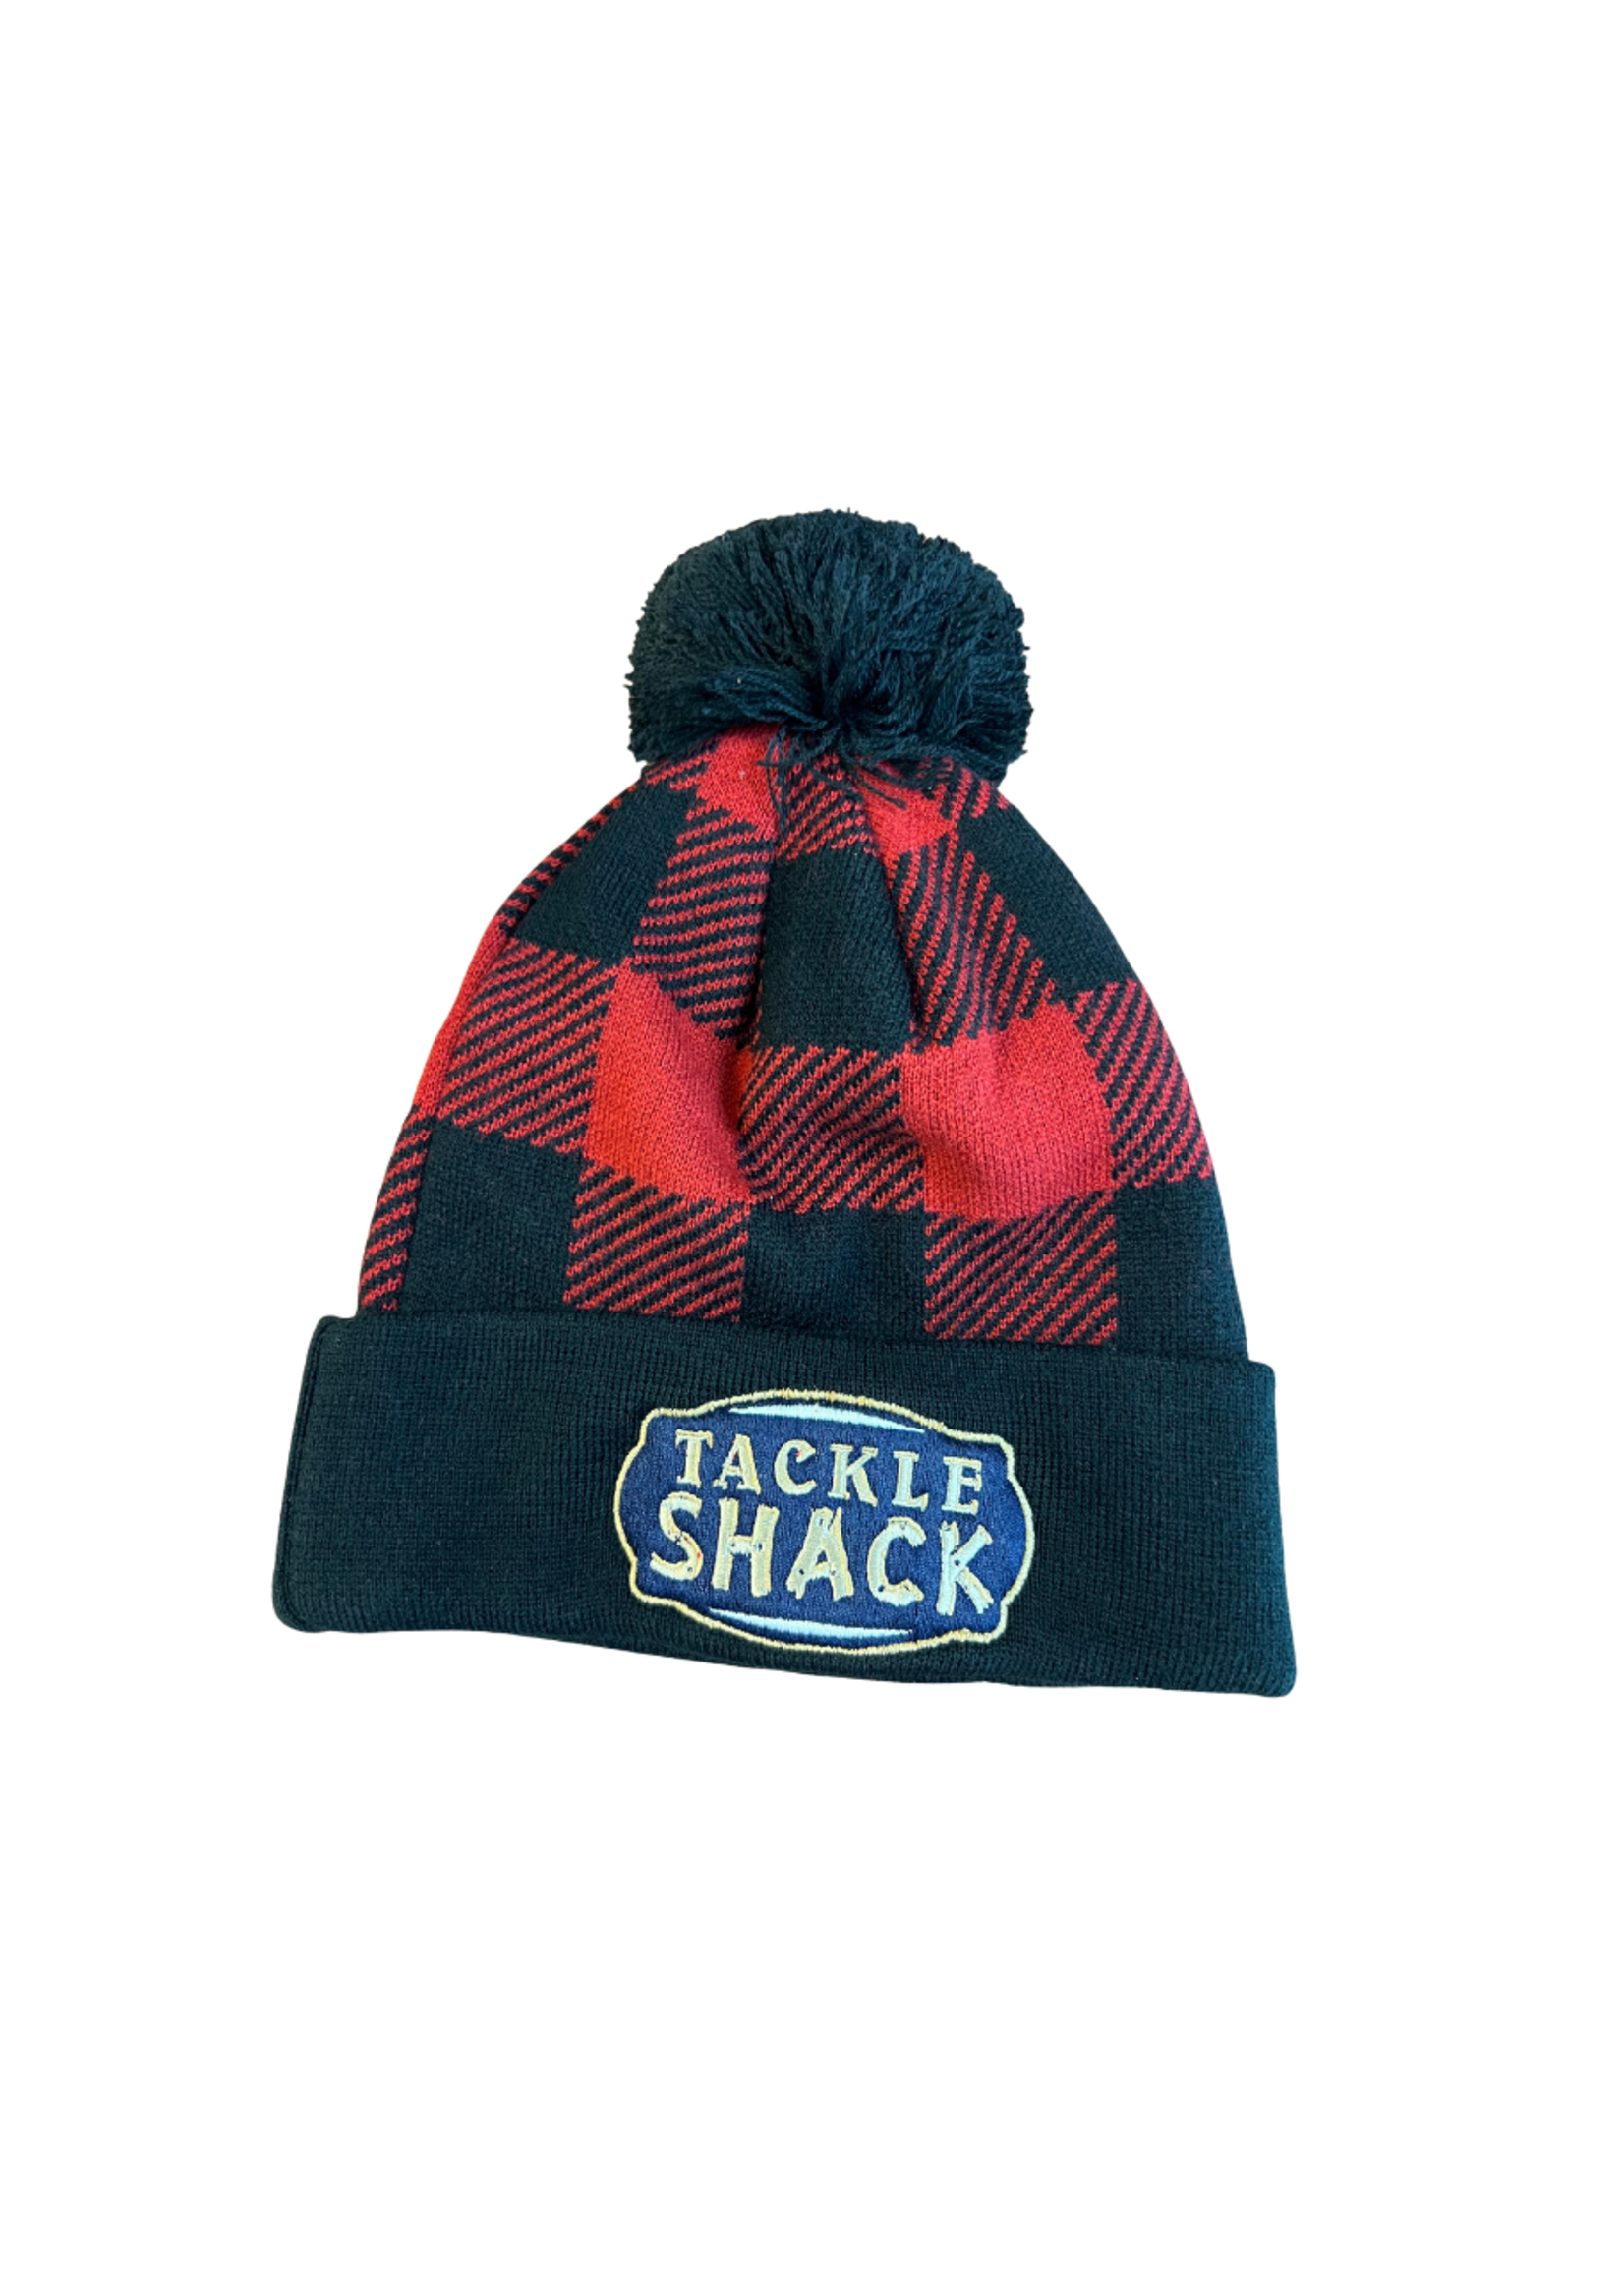 Tackle Shack Tackle Shack Buffalo Plaid Acrylic Knit Hat